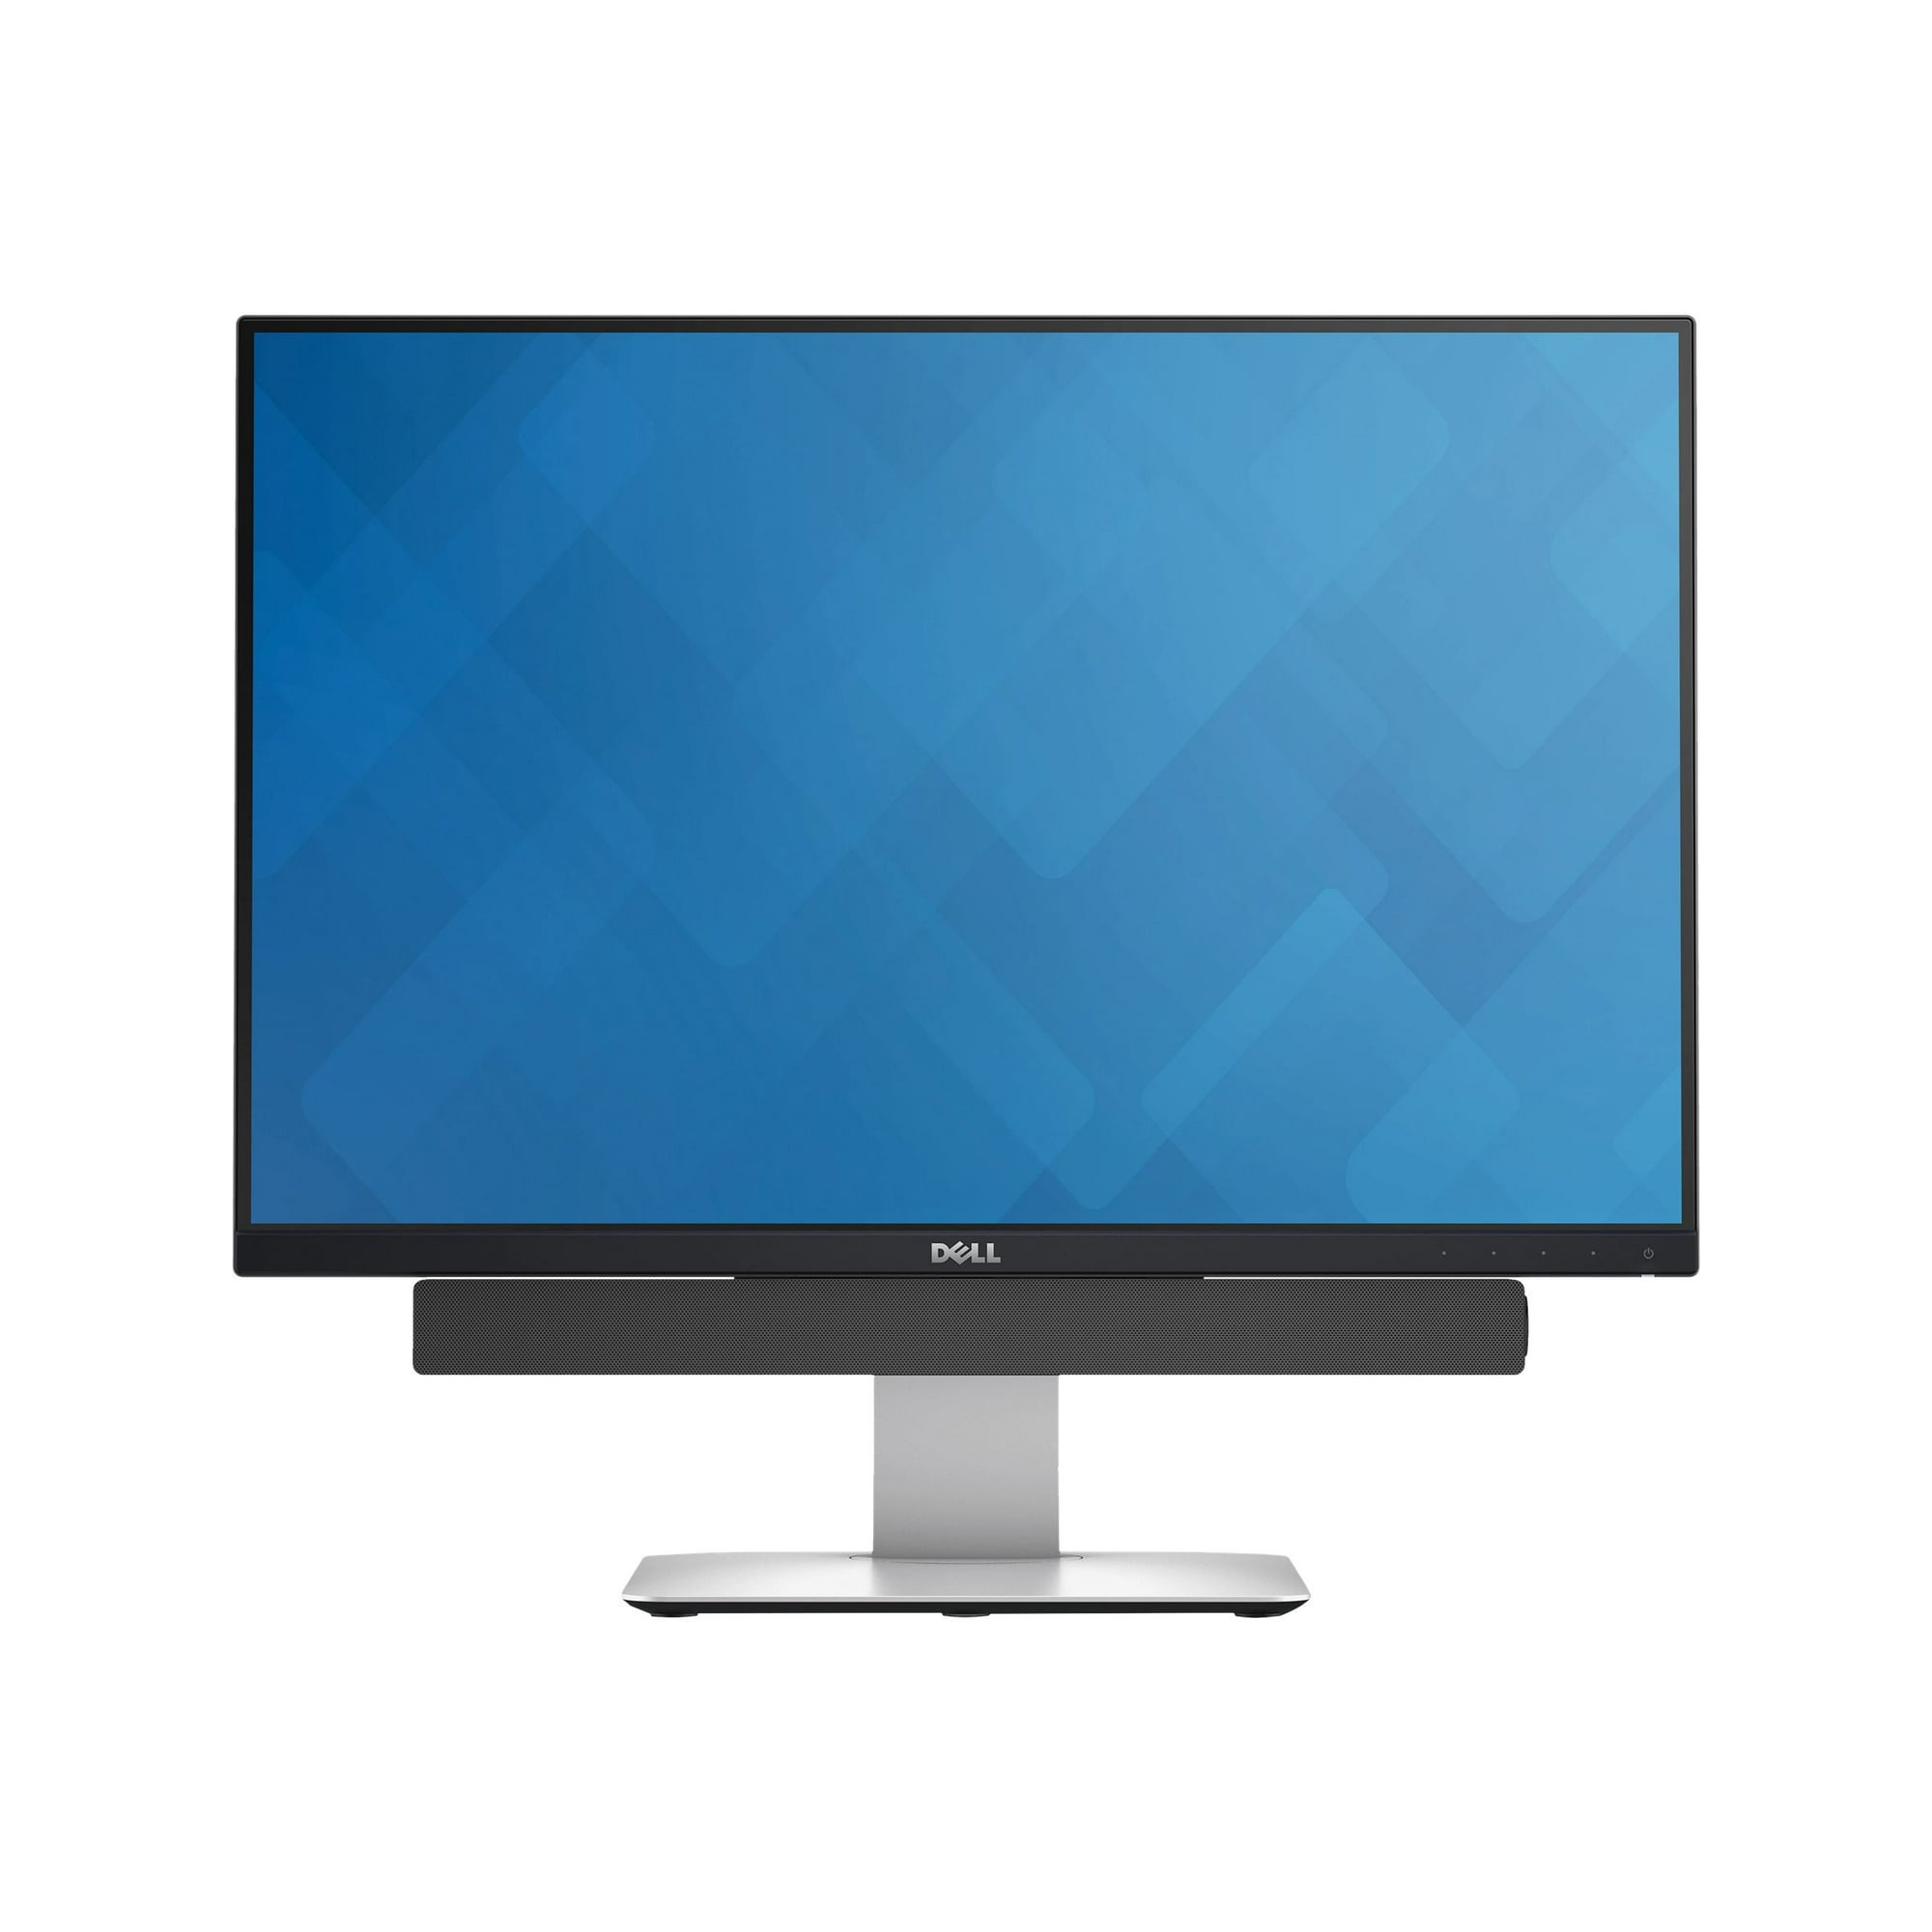 Dell UltraSharp U2415 - LED monitor - 24.1